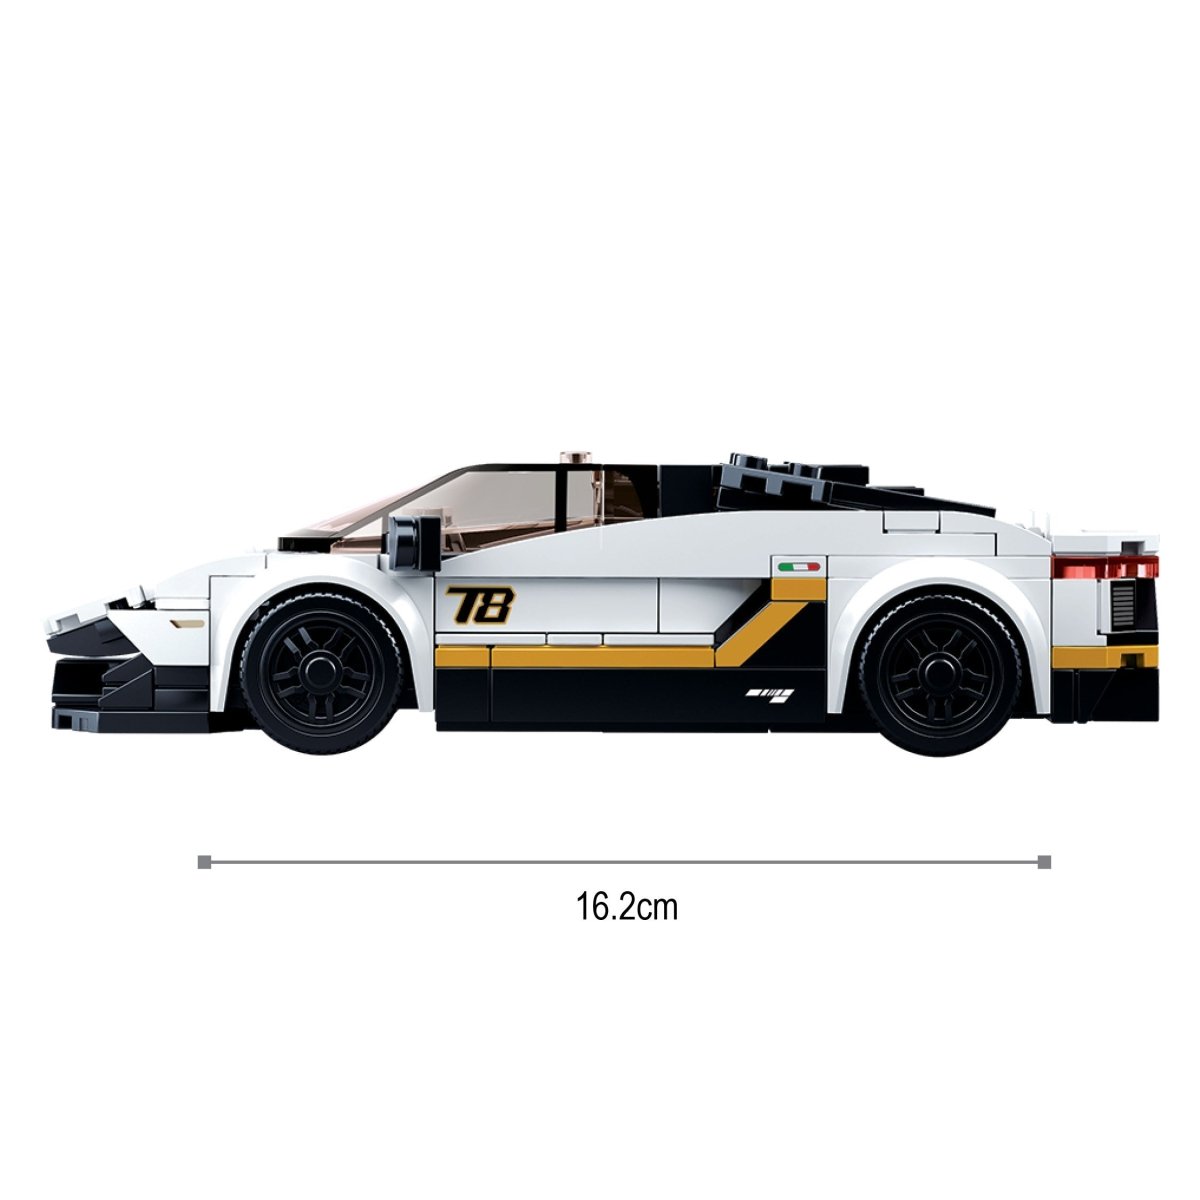 Sluban Racing Car- White Building Blocks Kit - M38-B0957